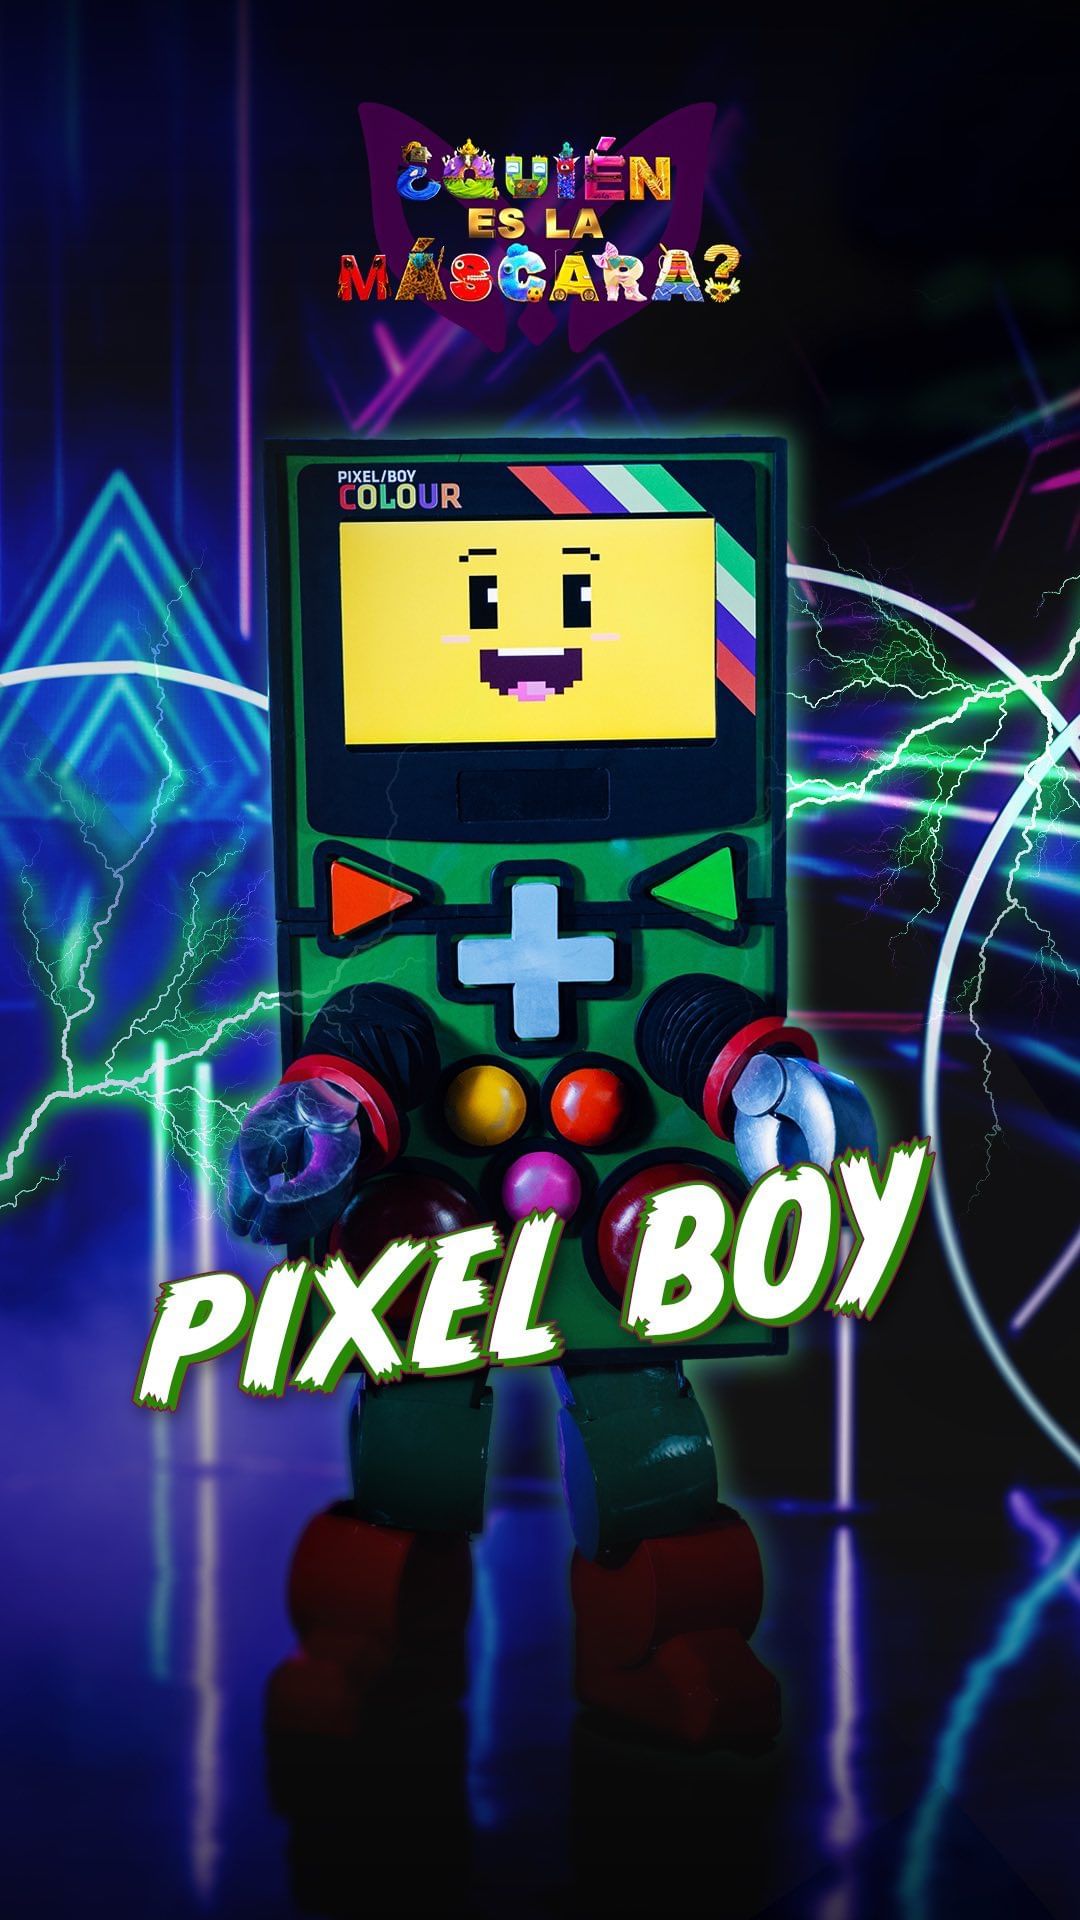 Pixel Boy The Masked Singer Wiki Fandom